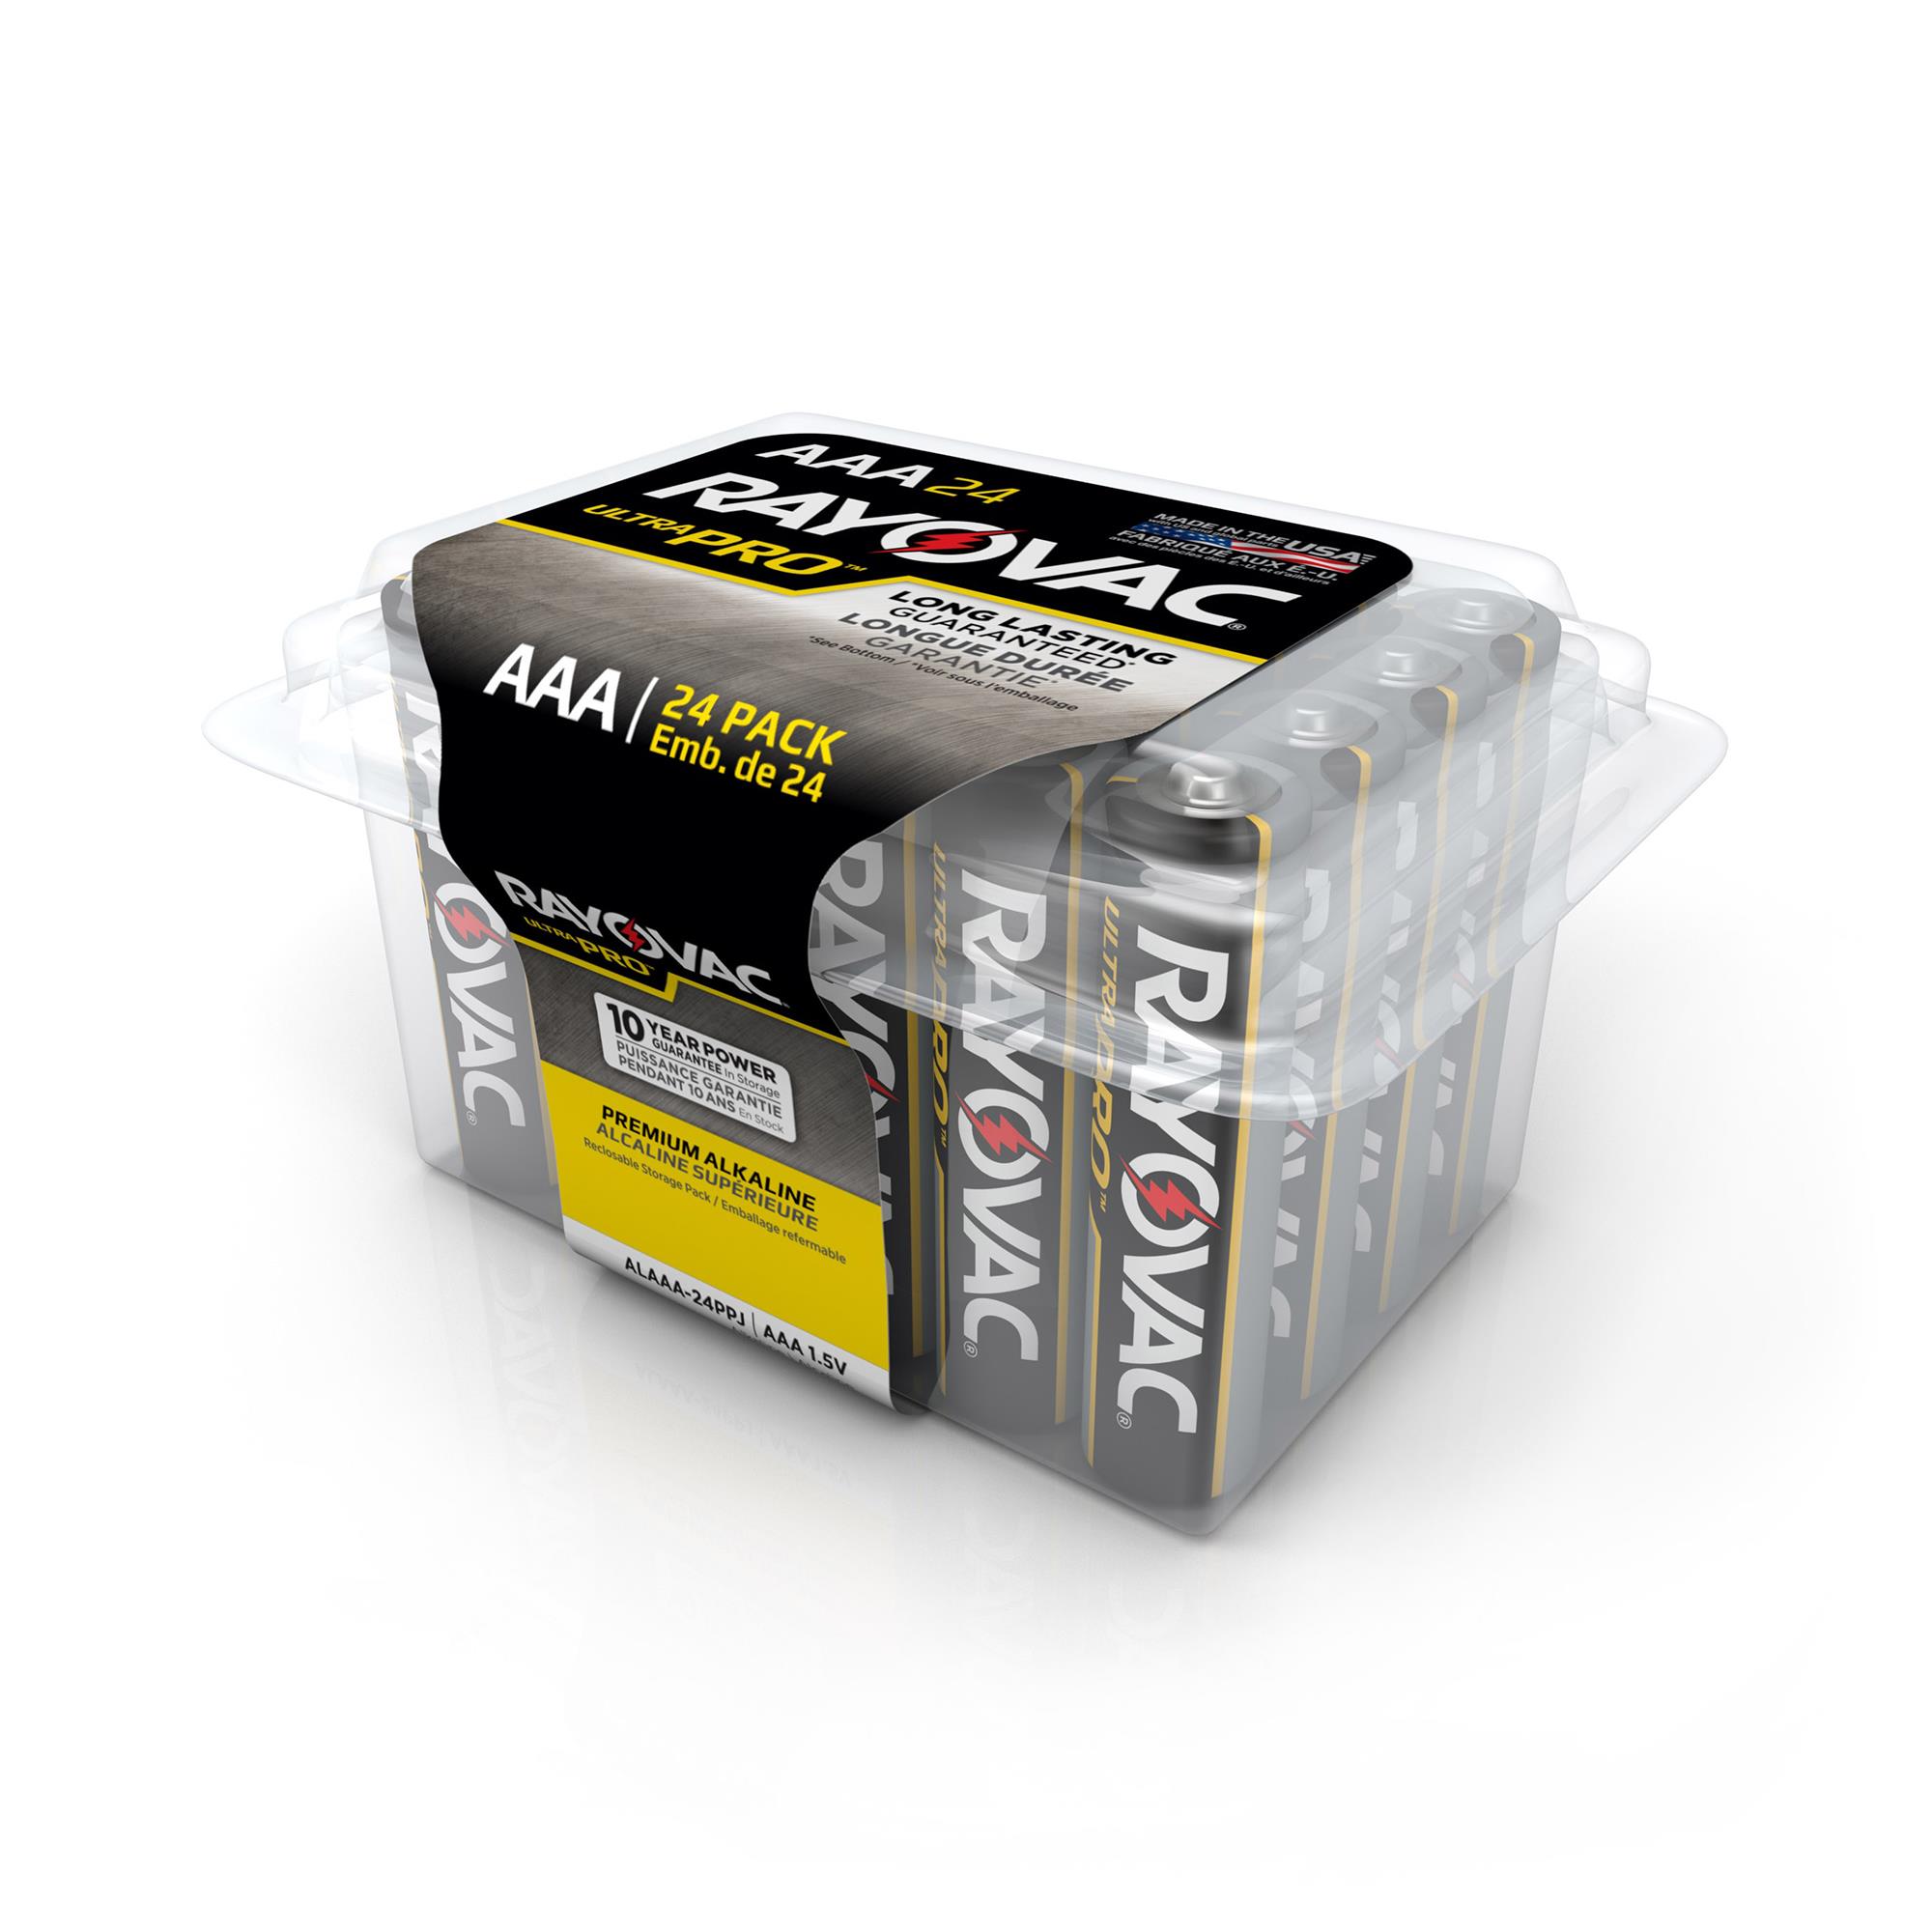 RAYOVAC ULTRAPRO AAA BATTERIES (24/PACK) - Rayovac Ultra Pro Batteries